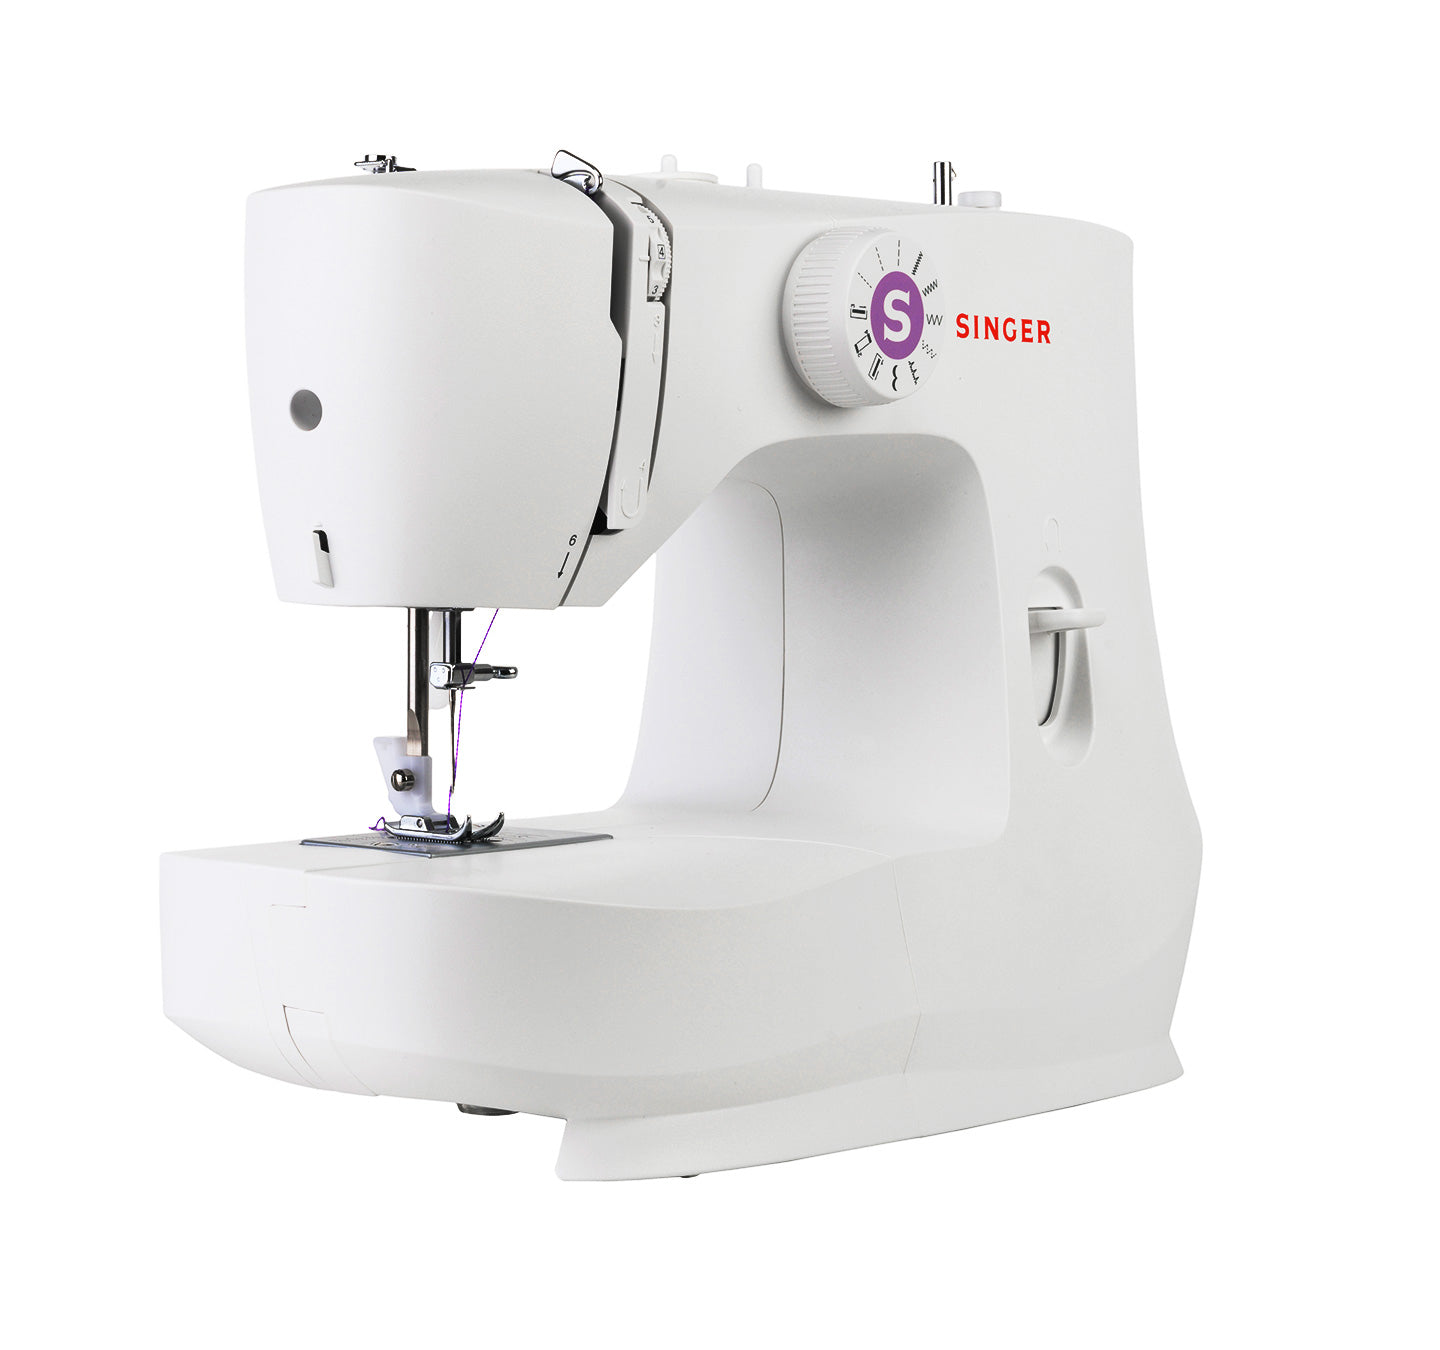 Singer M16 Sewing Machine - Easy to use beginner to intermediate machine